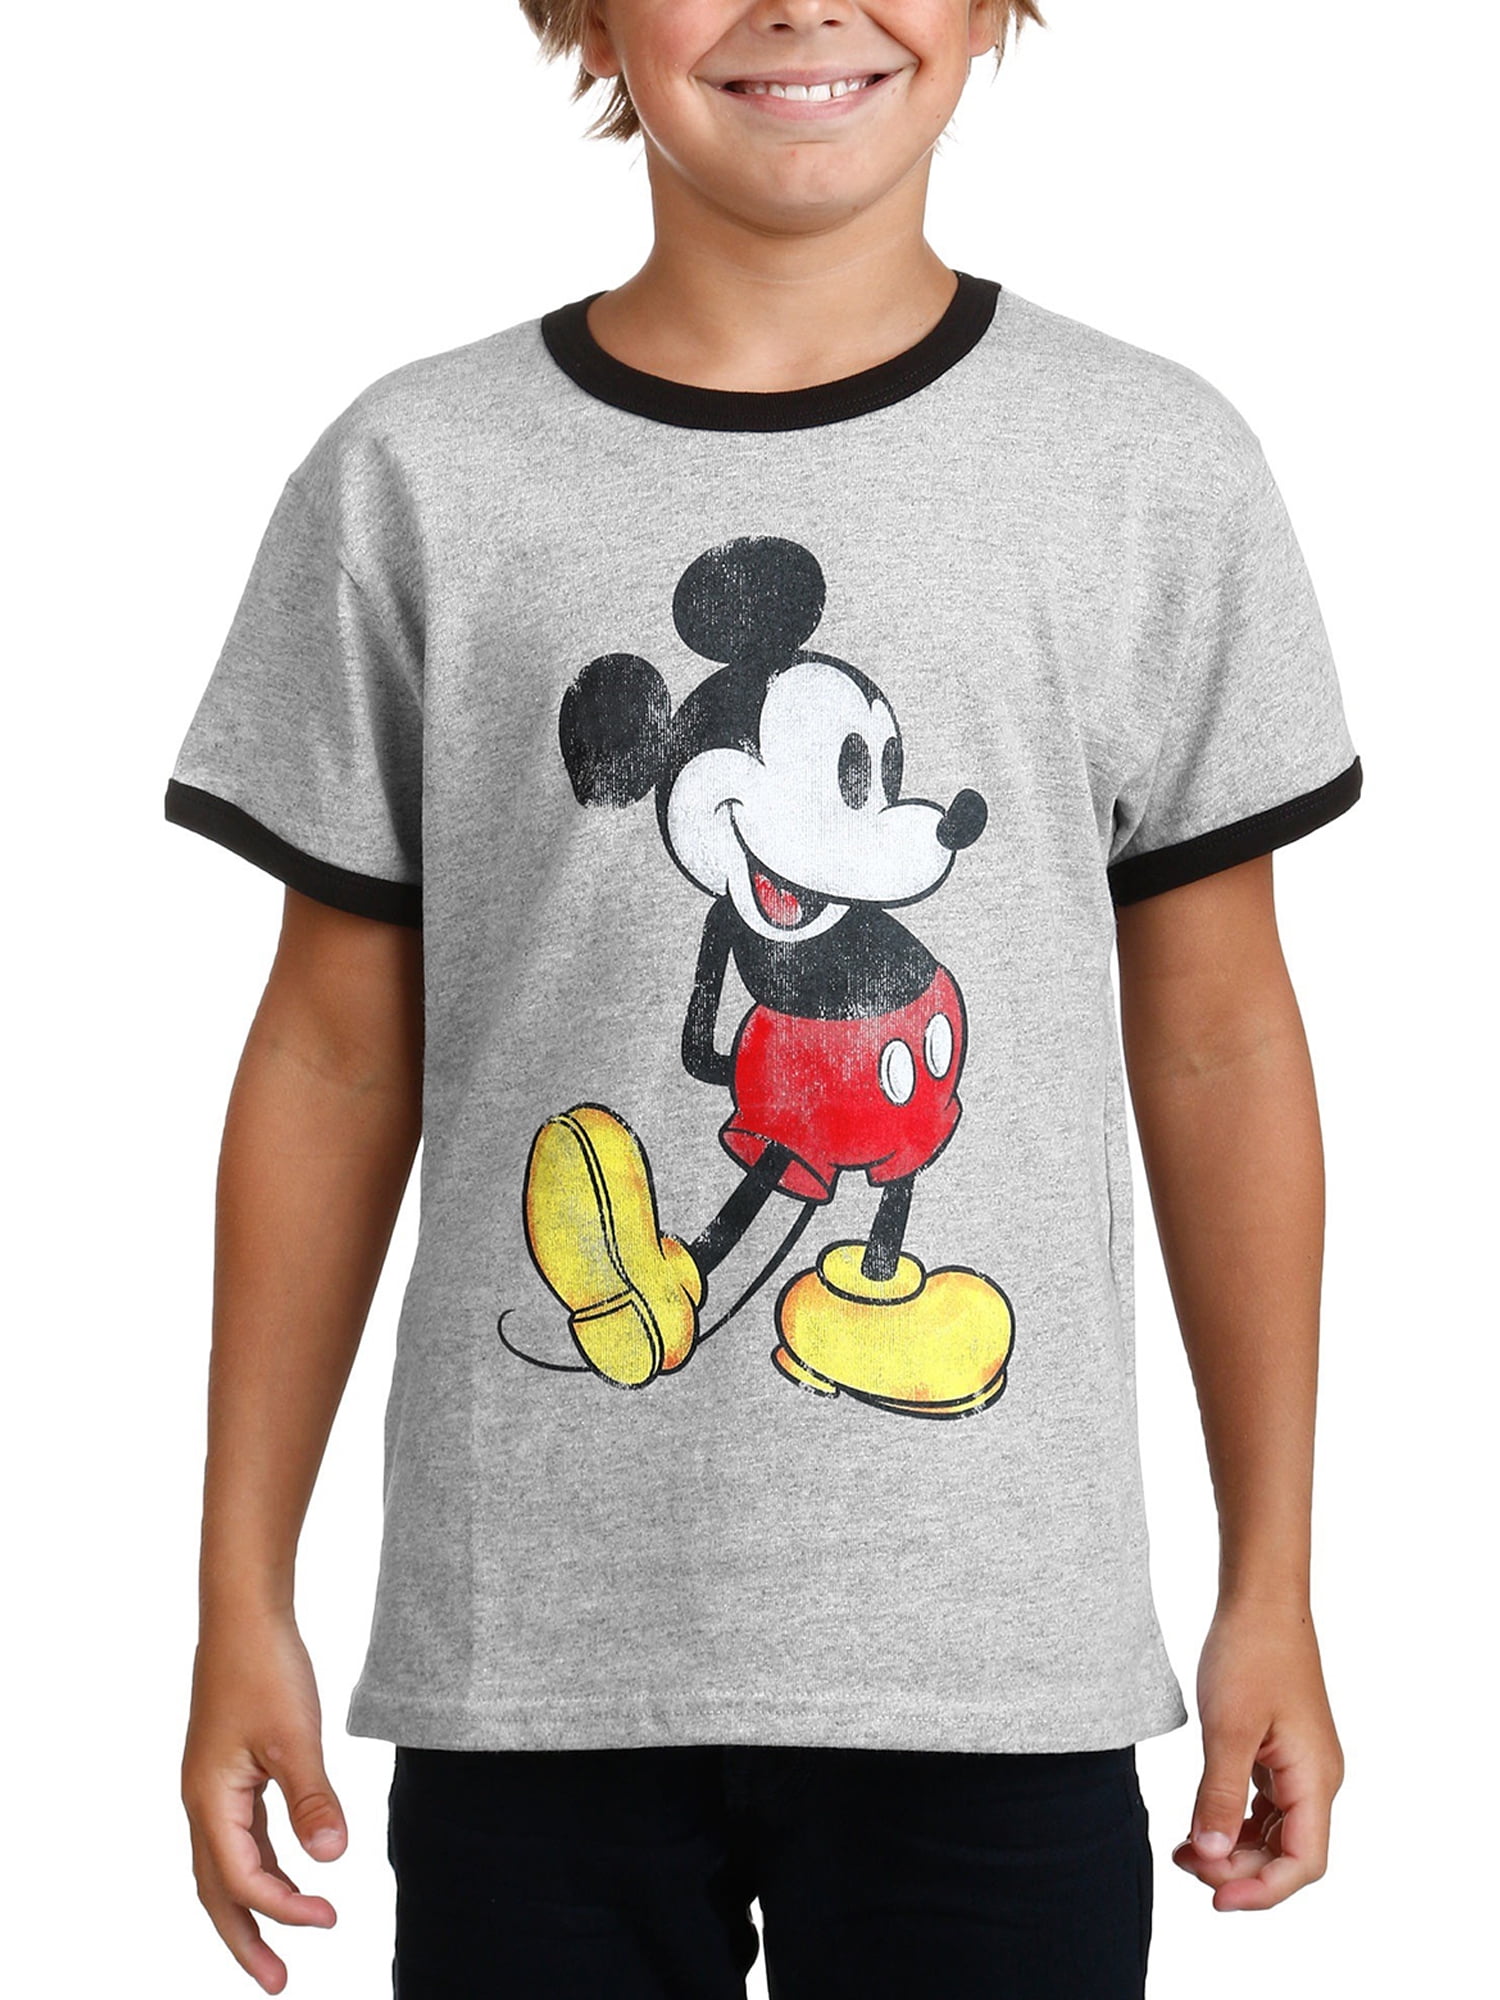 Cute Cartoon Mickey Mouse T Sirt Retro Movie TV T Shirt Kids Unisex Children 